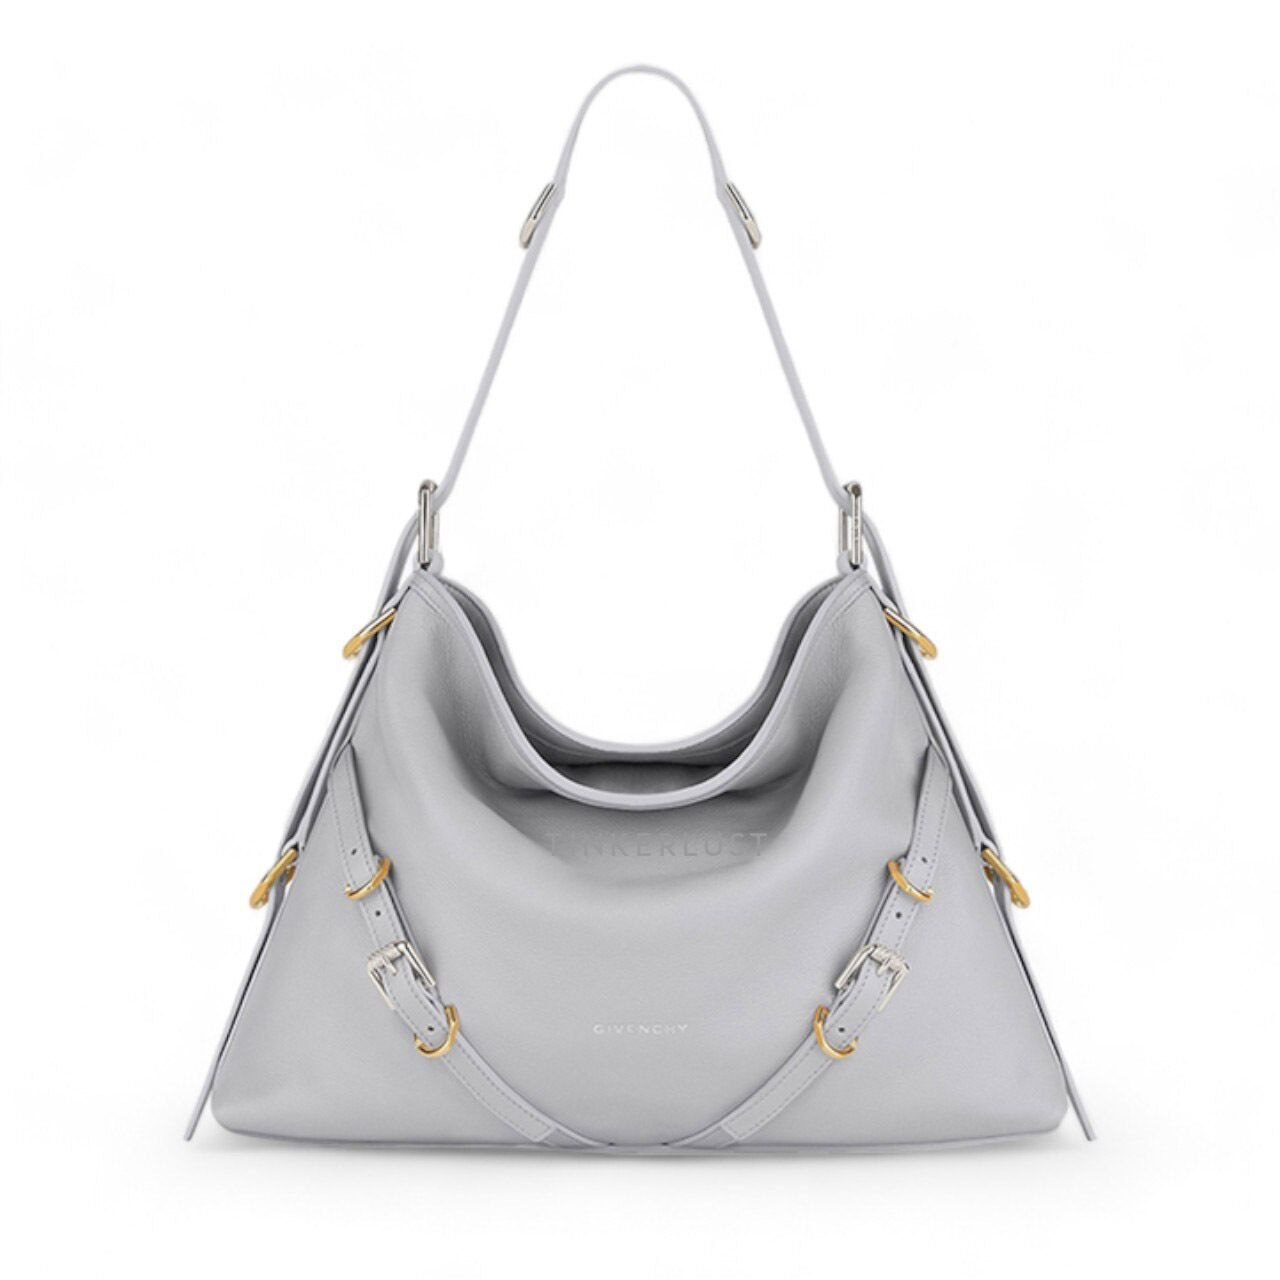 Givenchy Medium Voyou Shoulder Bag in Light Grey Tumbled Calfskin Leather